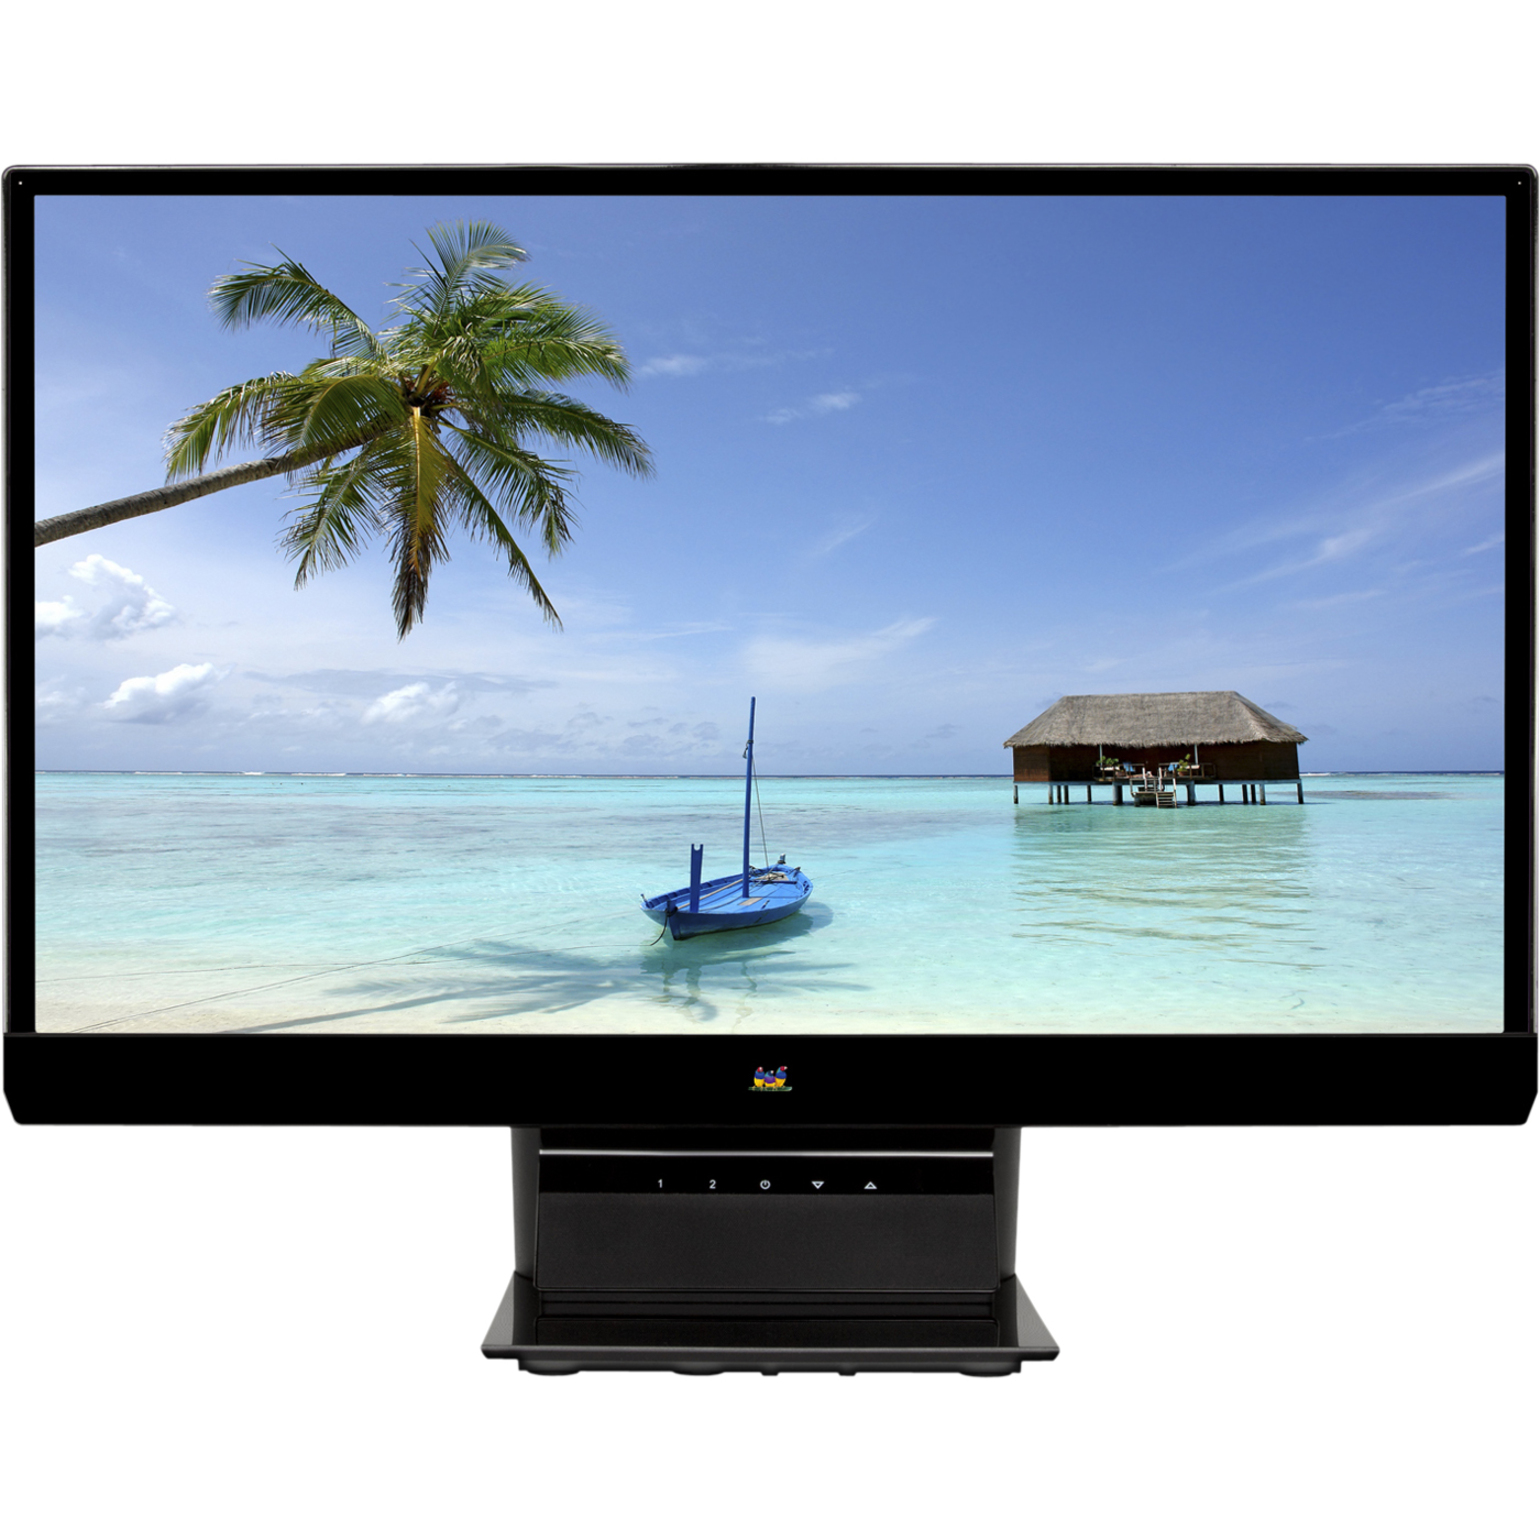 ViewSonic VX2370Smh-LED 23" Class Full HD LCD Monitor - image 4 of 5